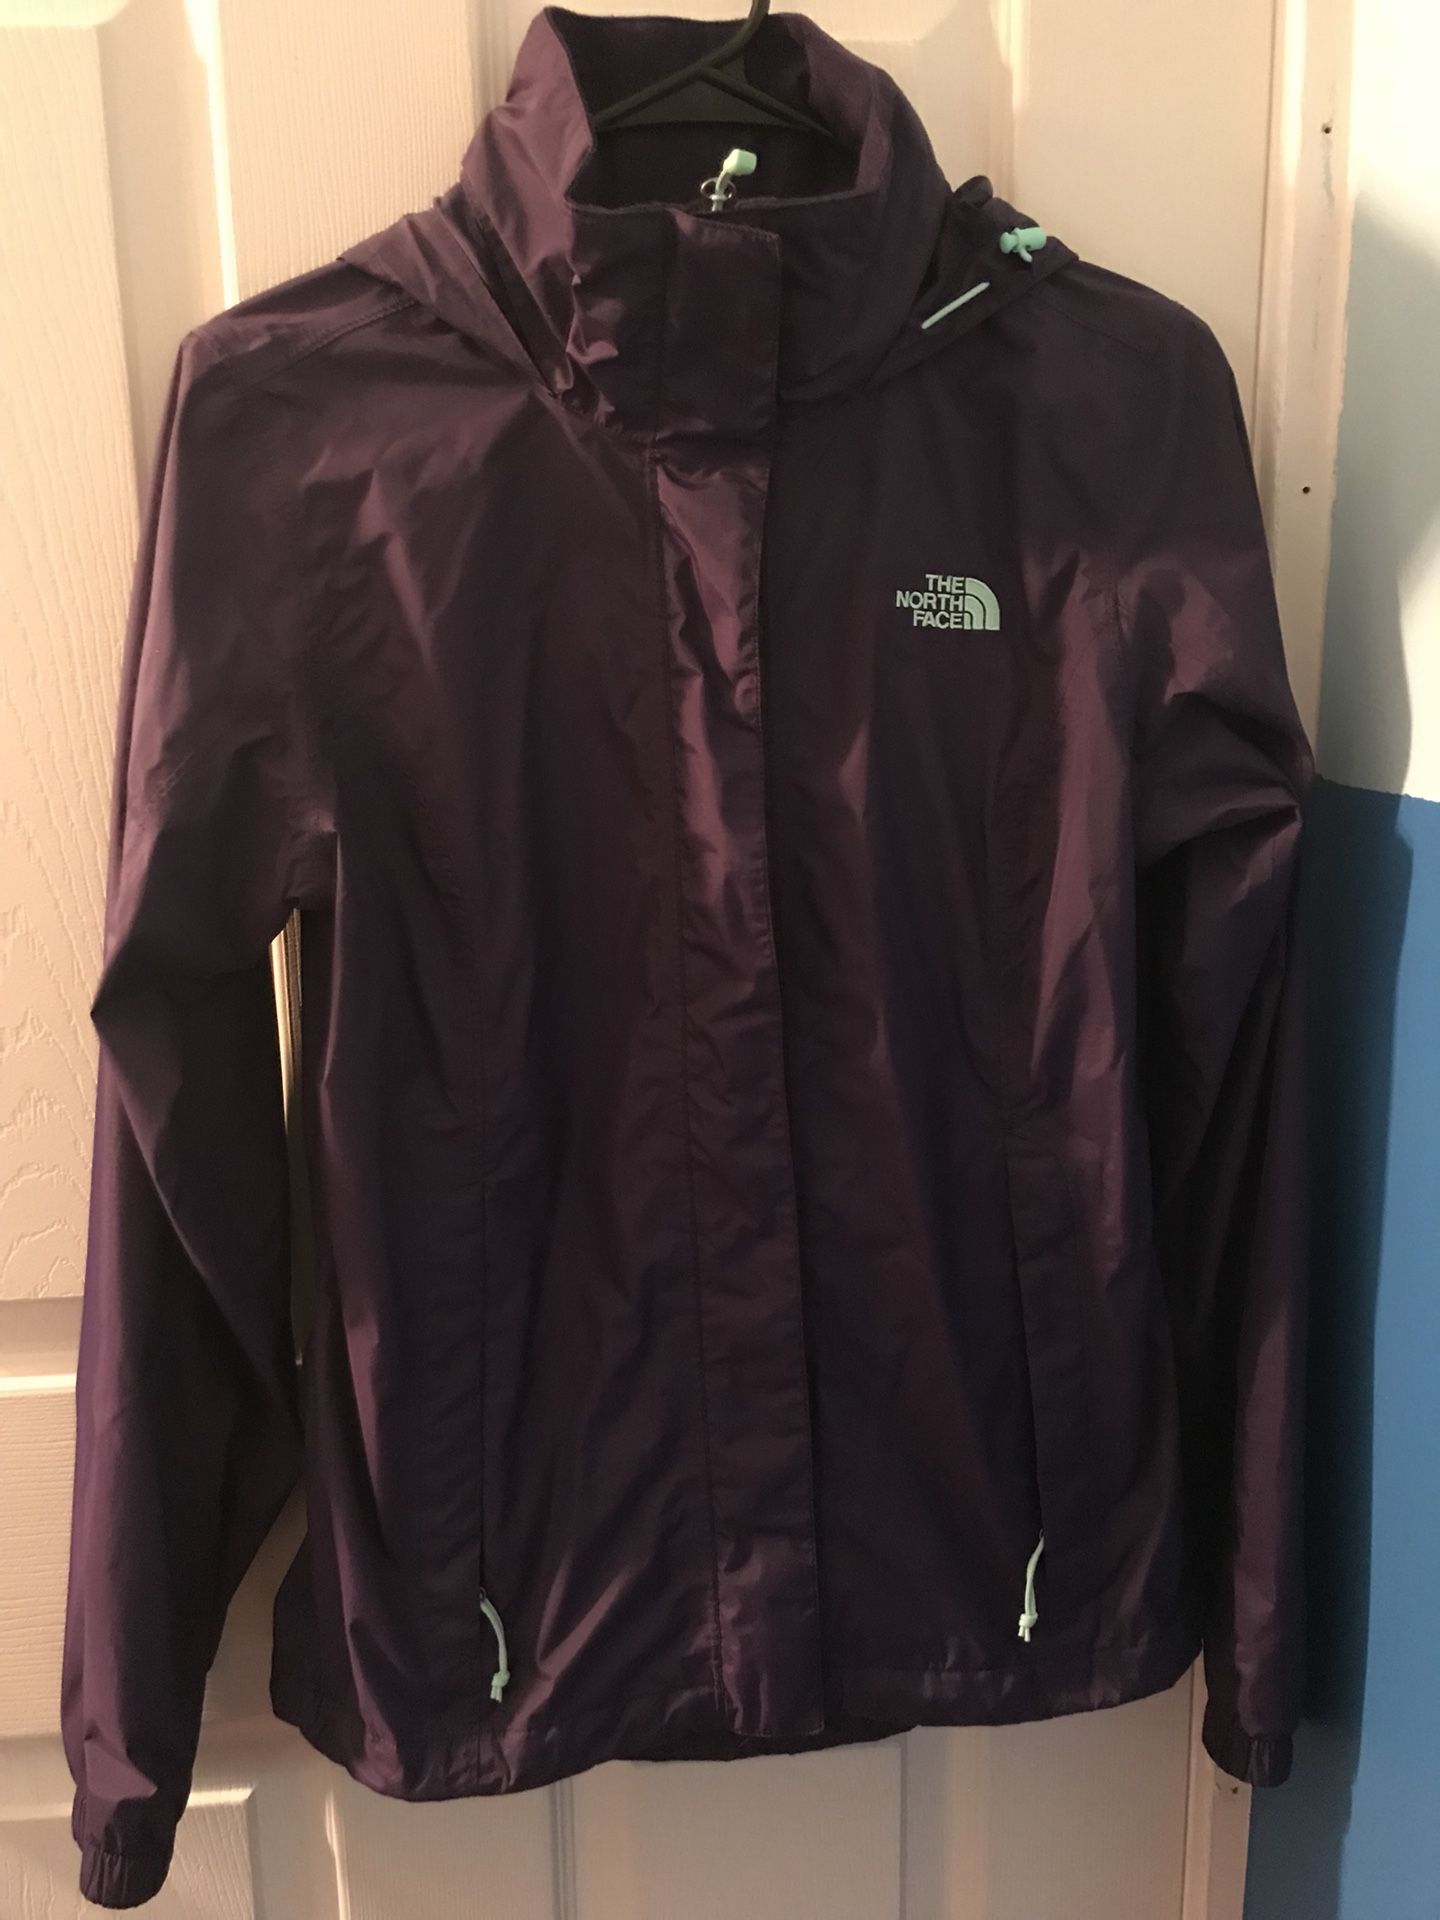 Juniors North Face Rain jacket size small